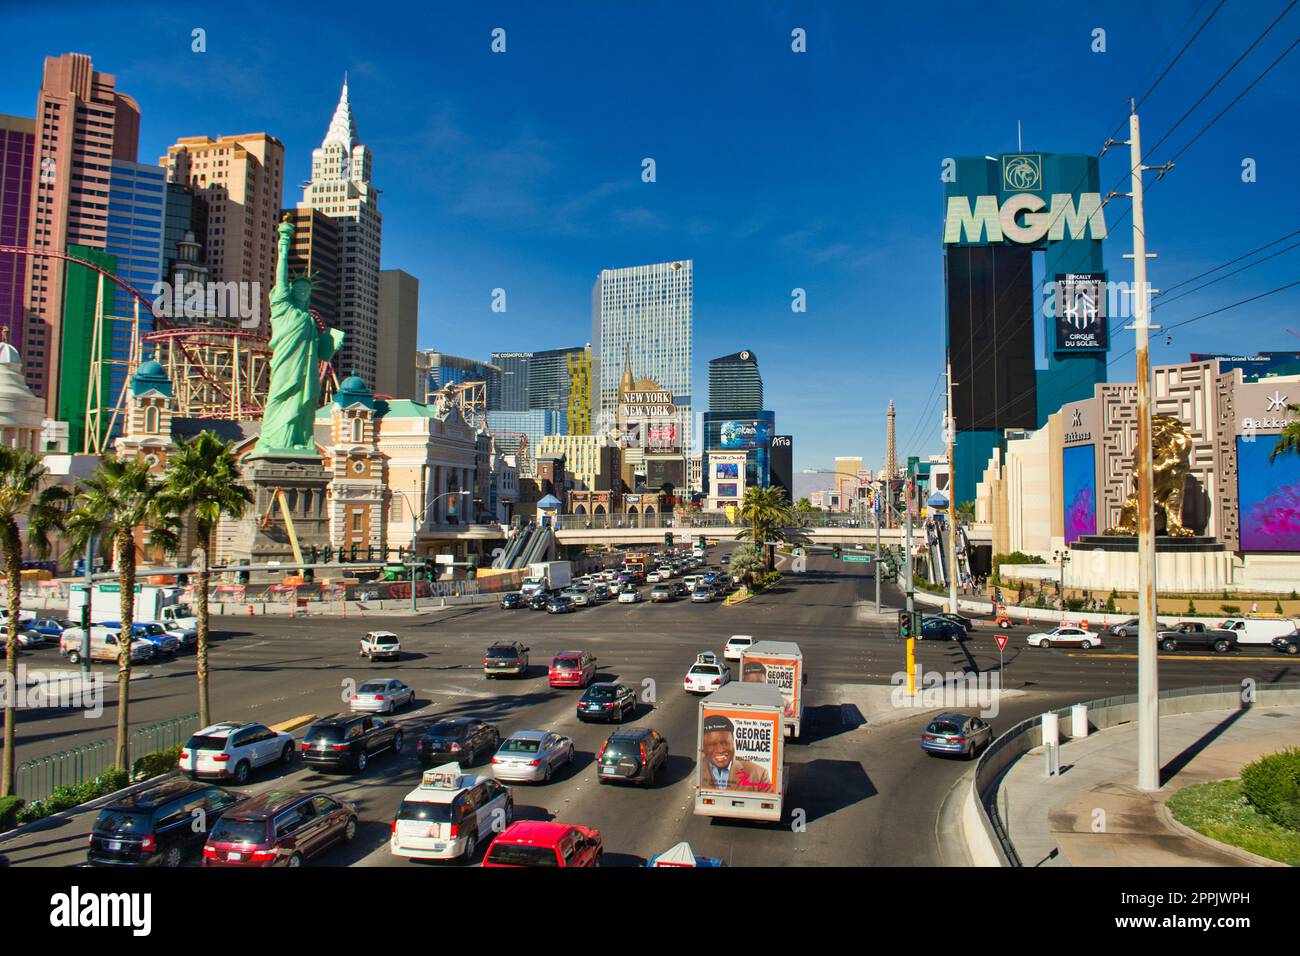 Ammira la Strip di Las Vegas, Nevada, con MGM, New York, Hakkasan e aria Tropicana Avenue Foto Stock